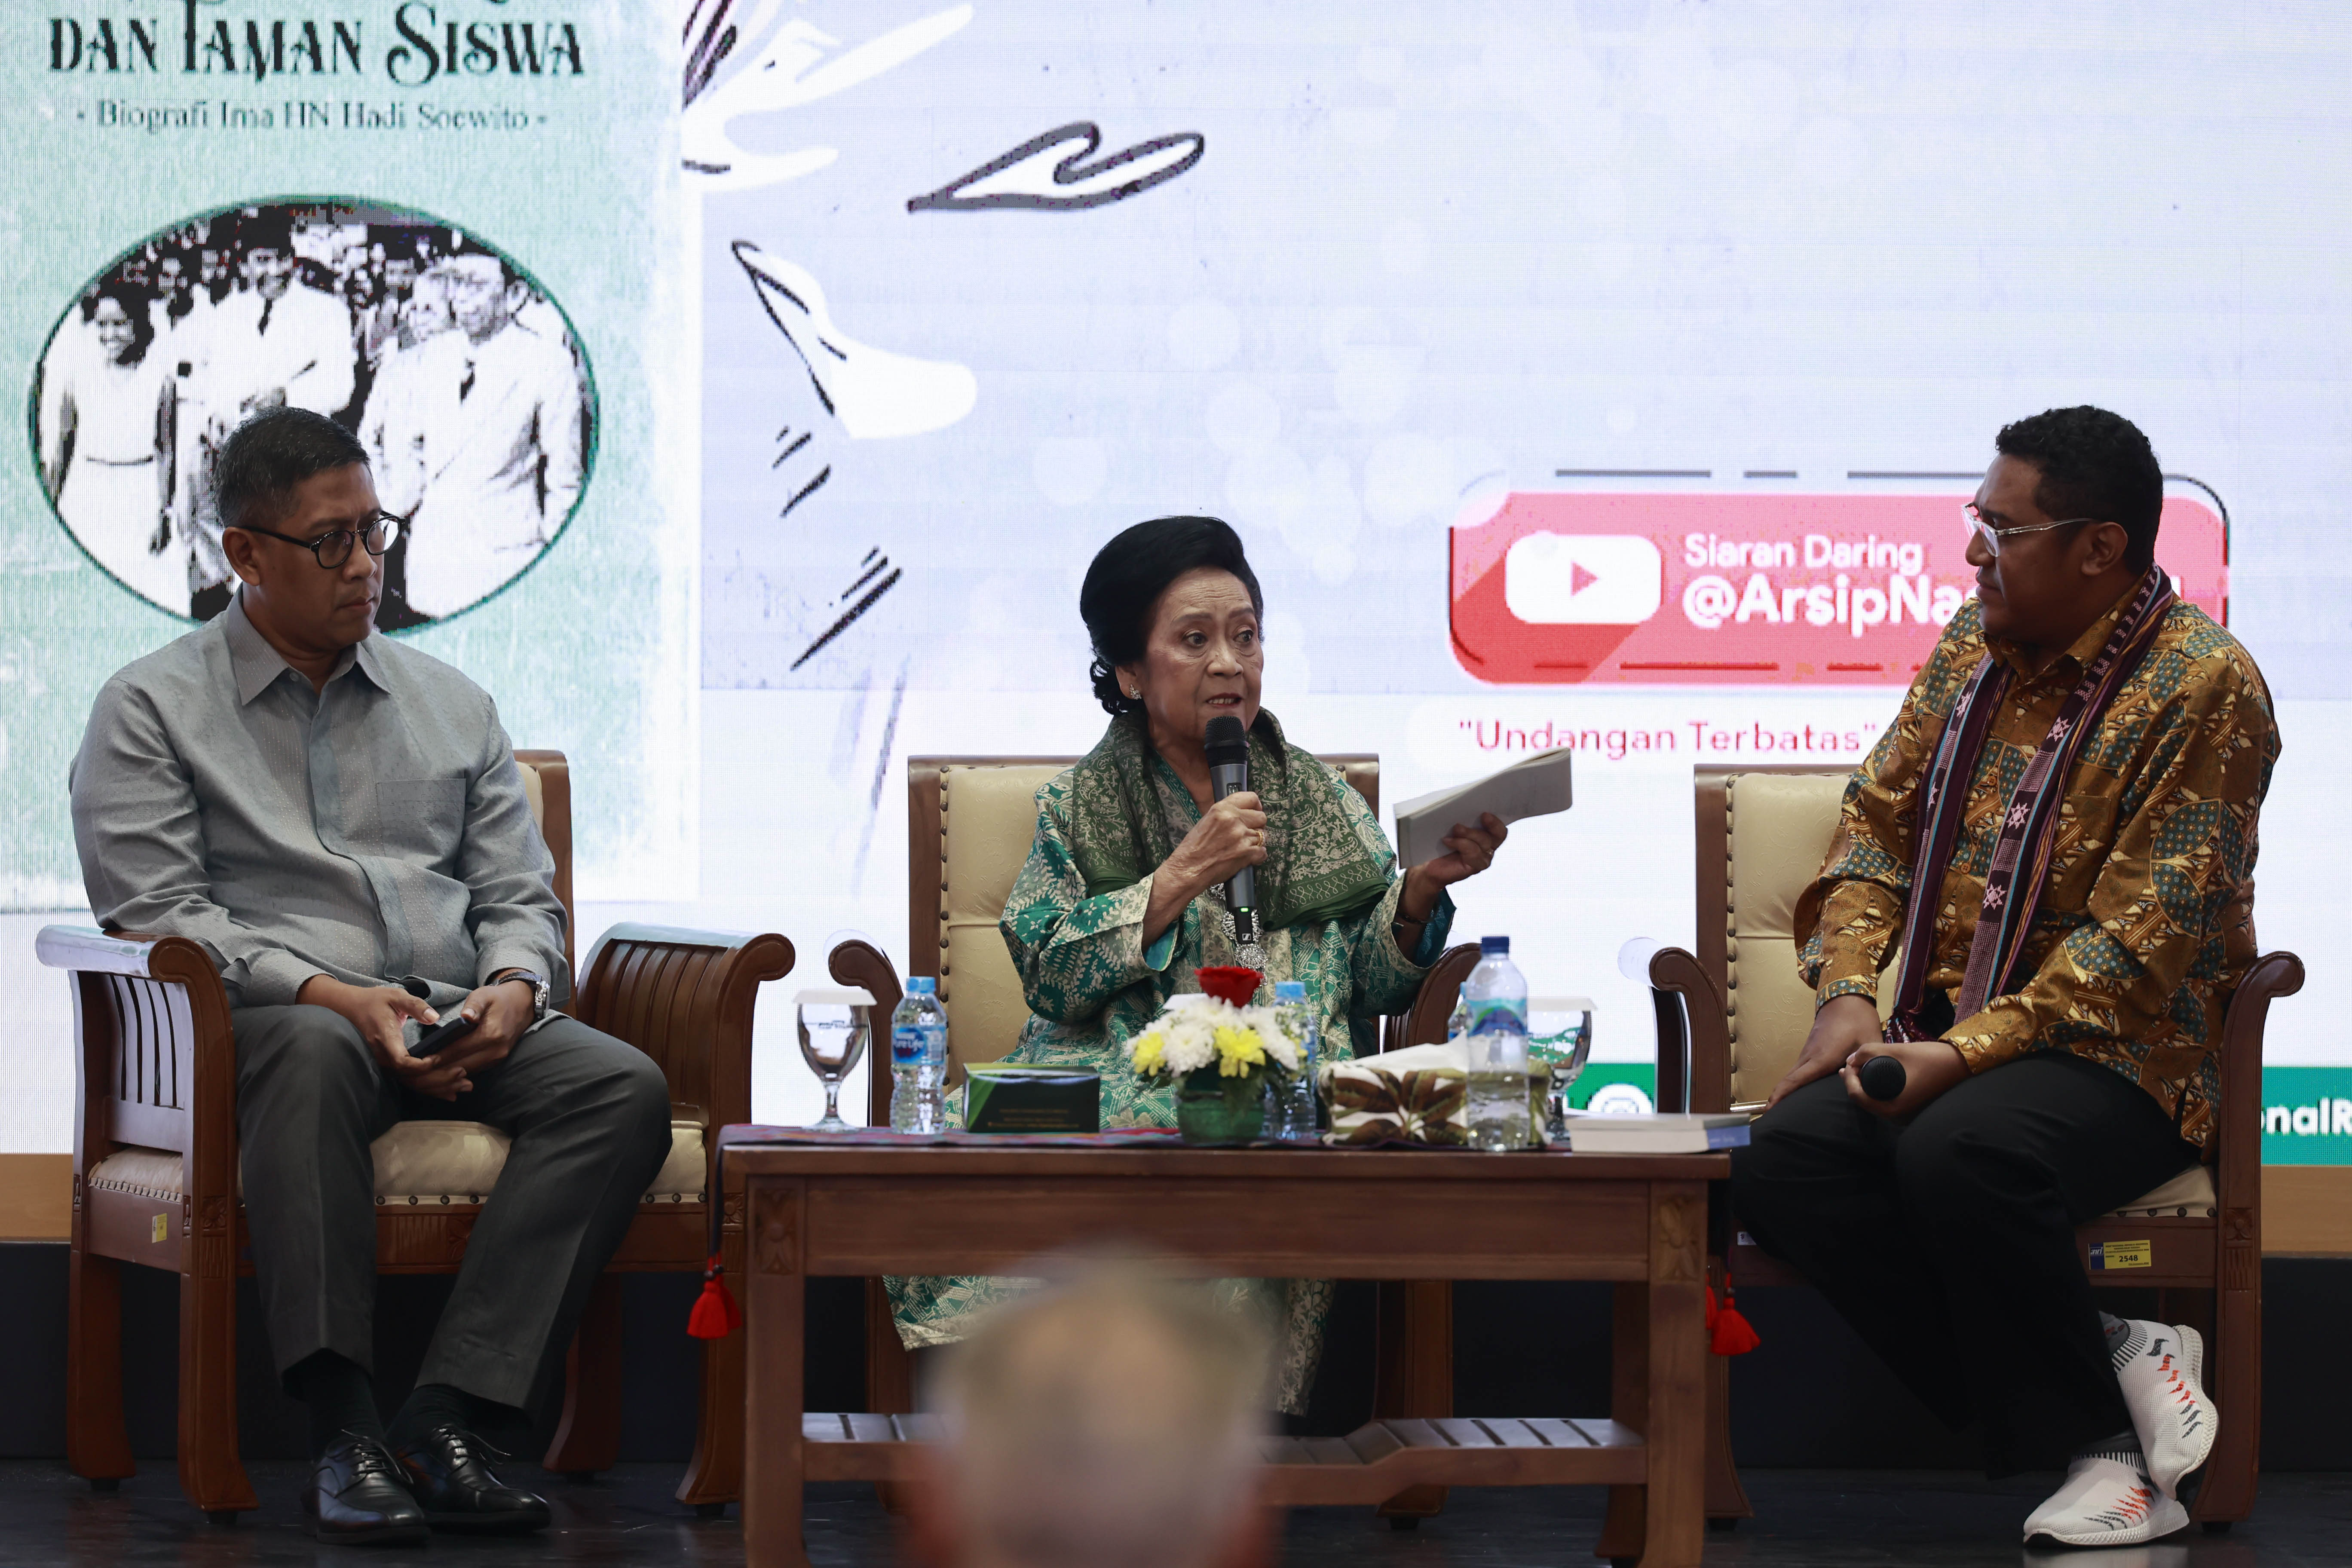 ANRI dan Penerbit KPG bekerjasama untuk menggelar Bincang Buku Untuk Bung Karno dan Taman Siswa